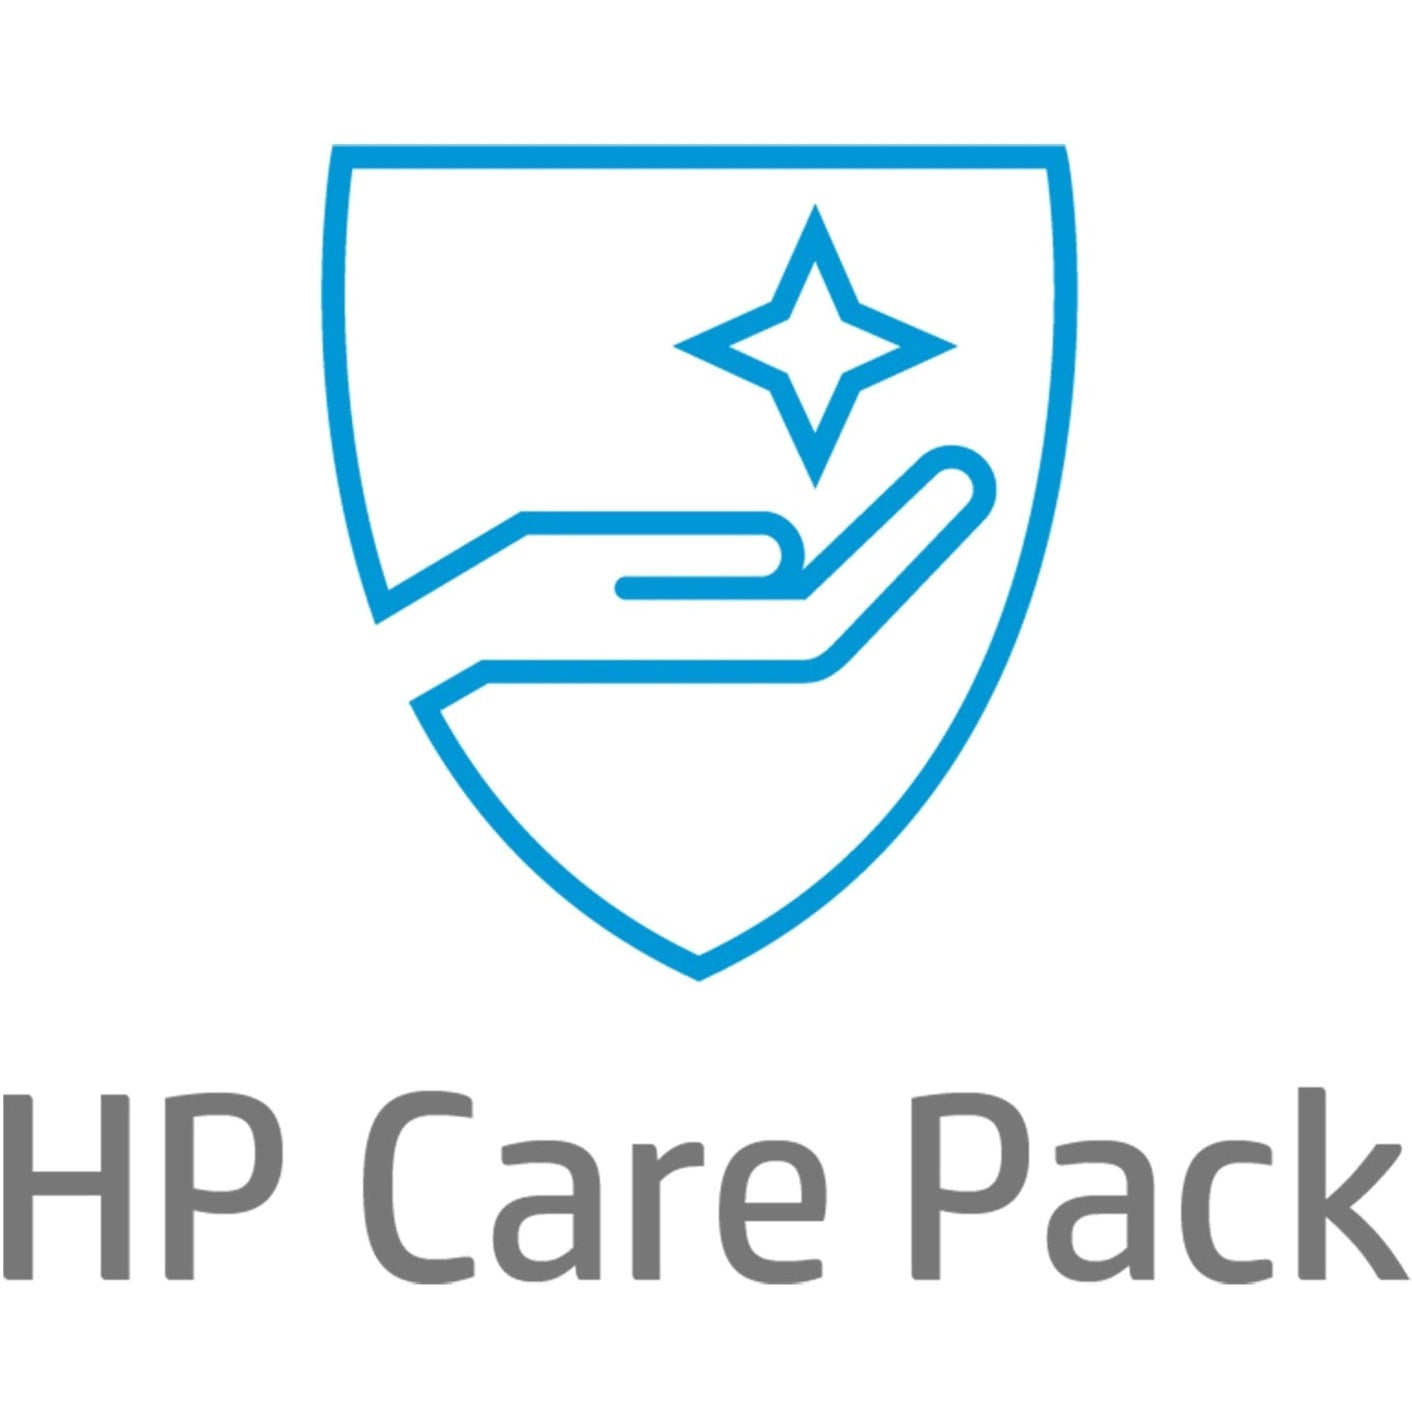 HP Care Pack - 2 Year - Service (UQ885E)